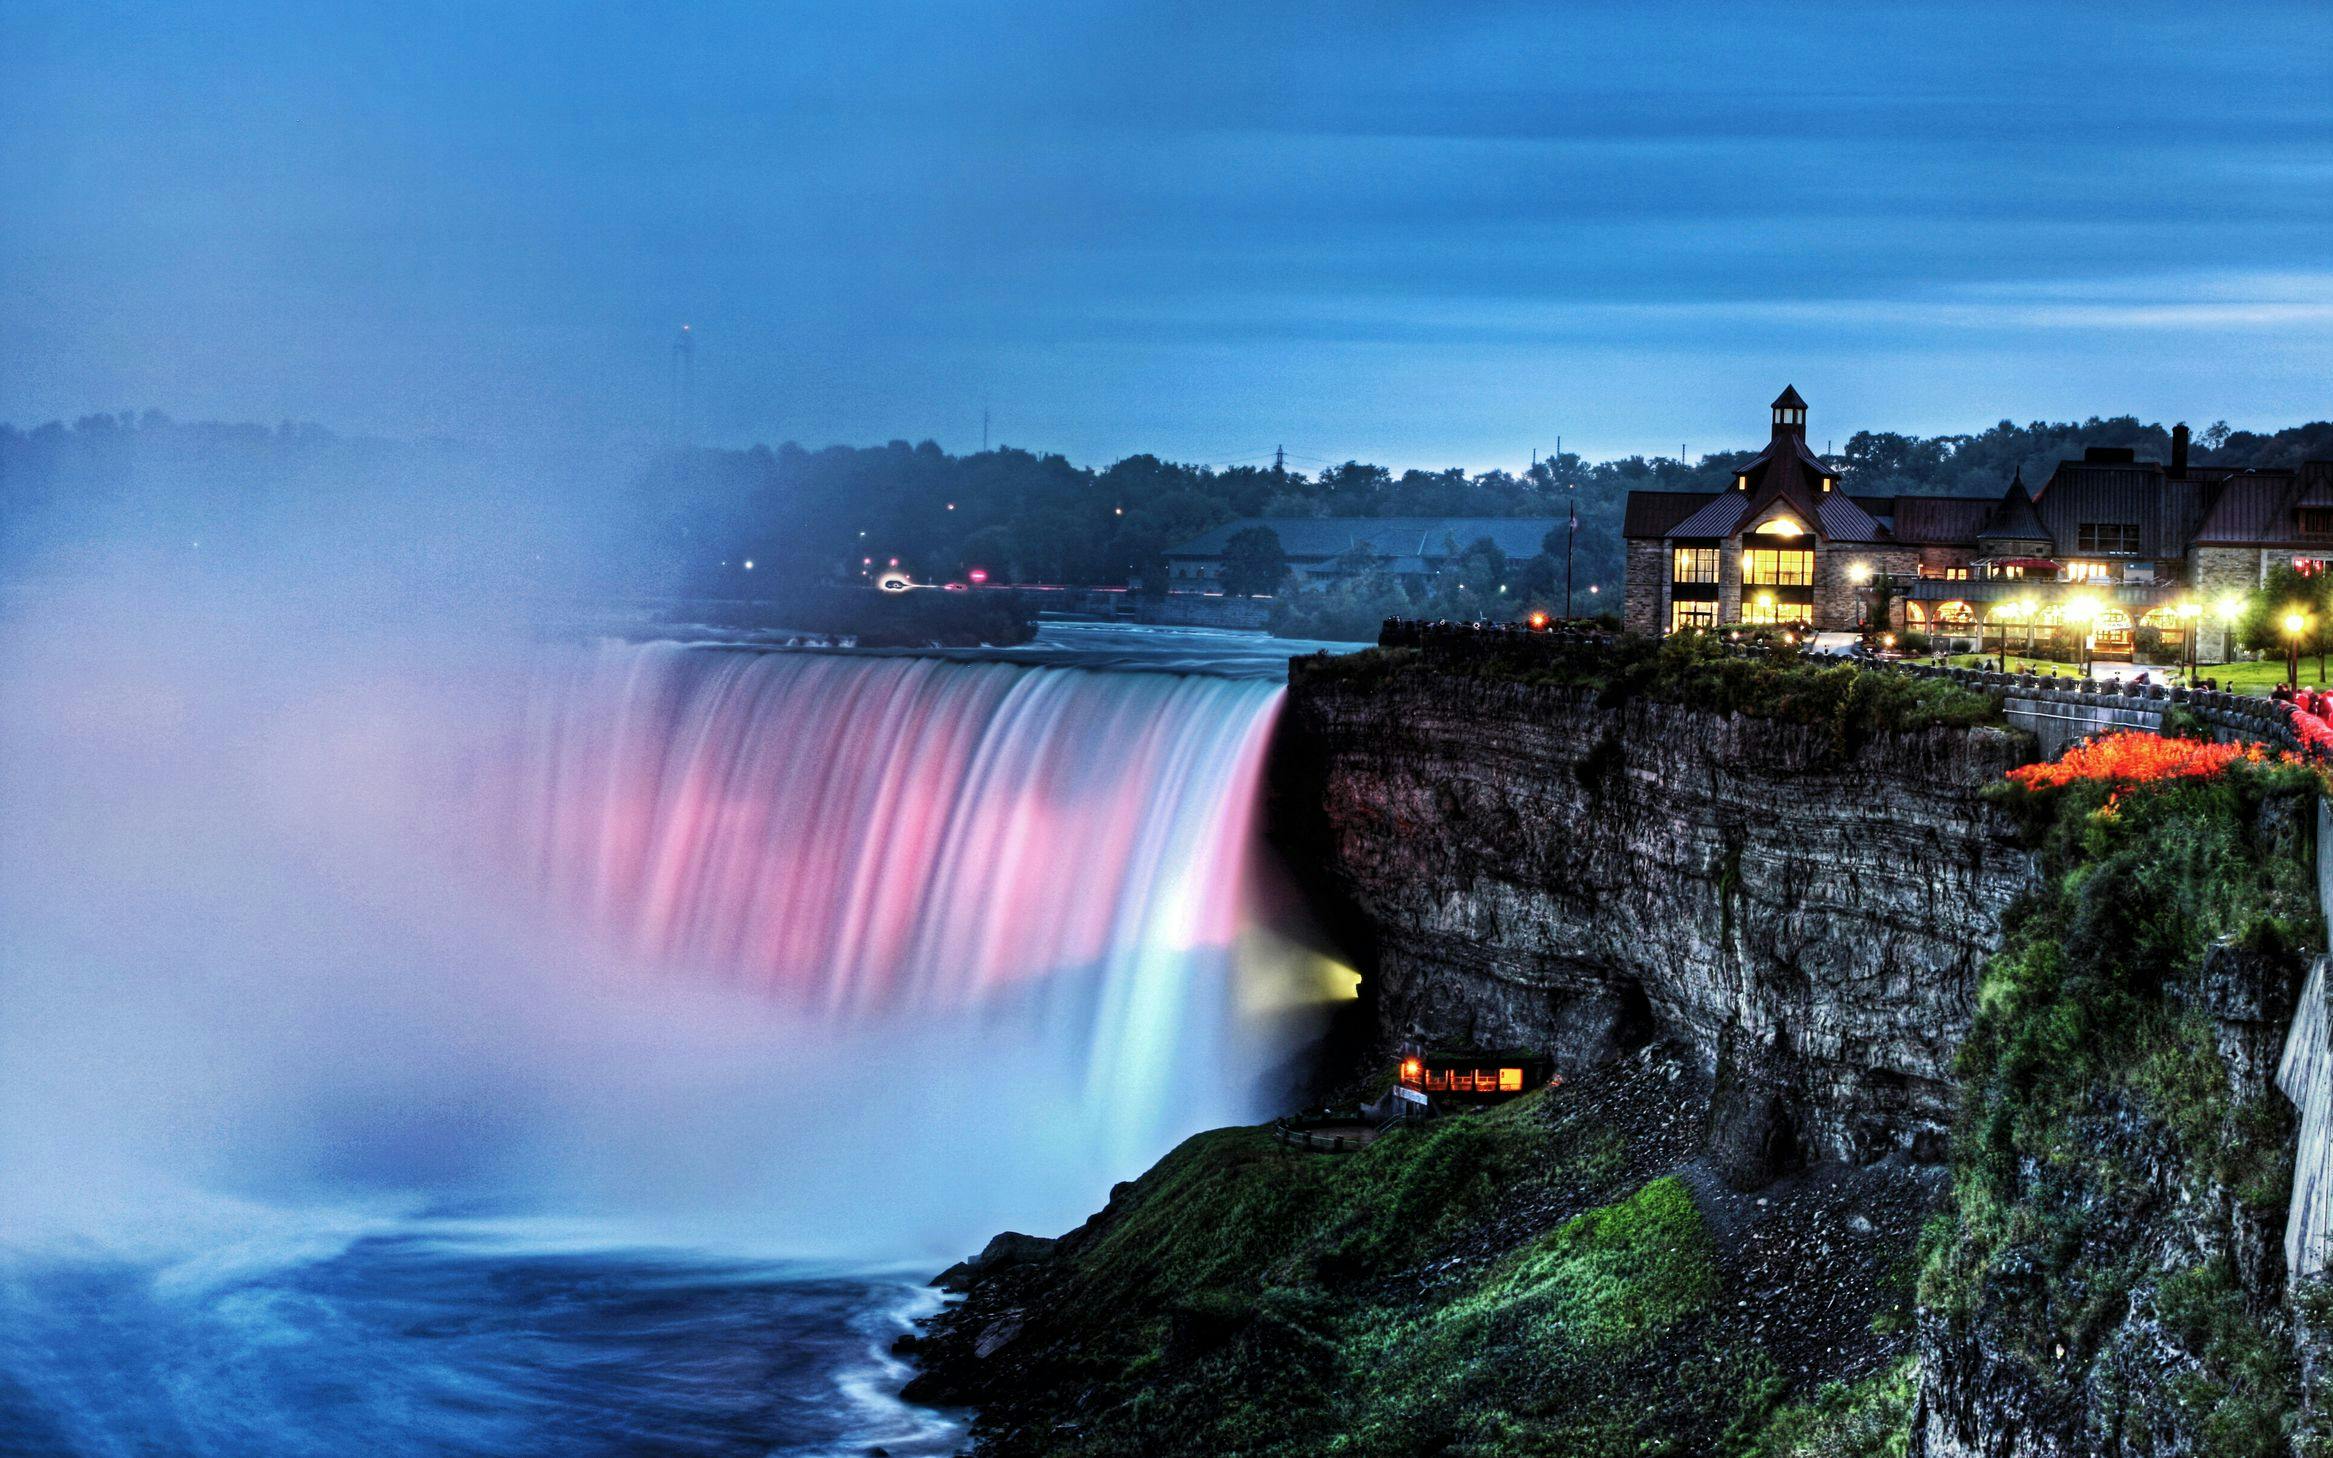 Niagara Falls Canada: day and night combo tour